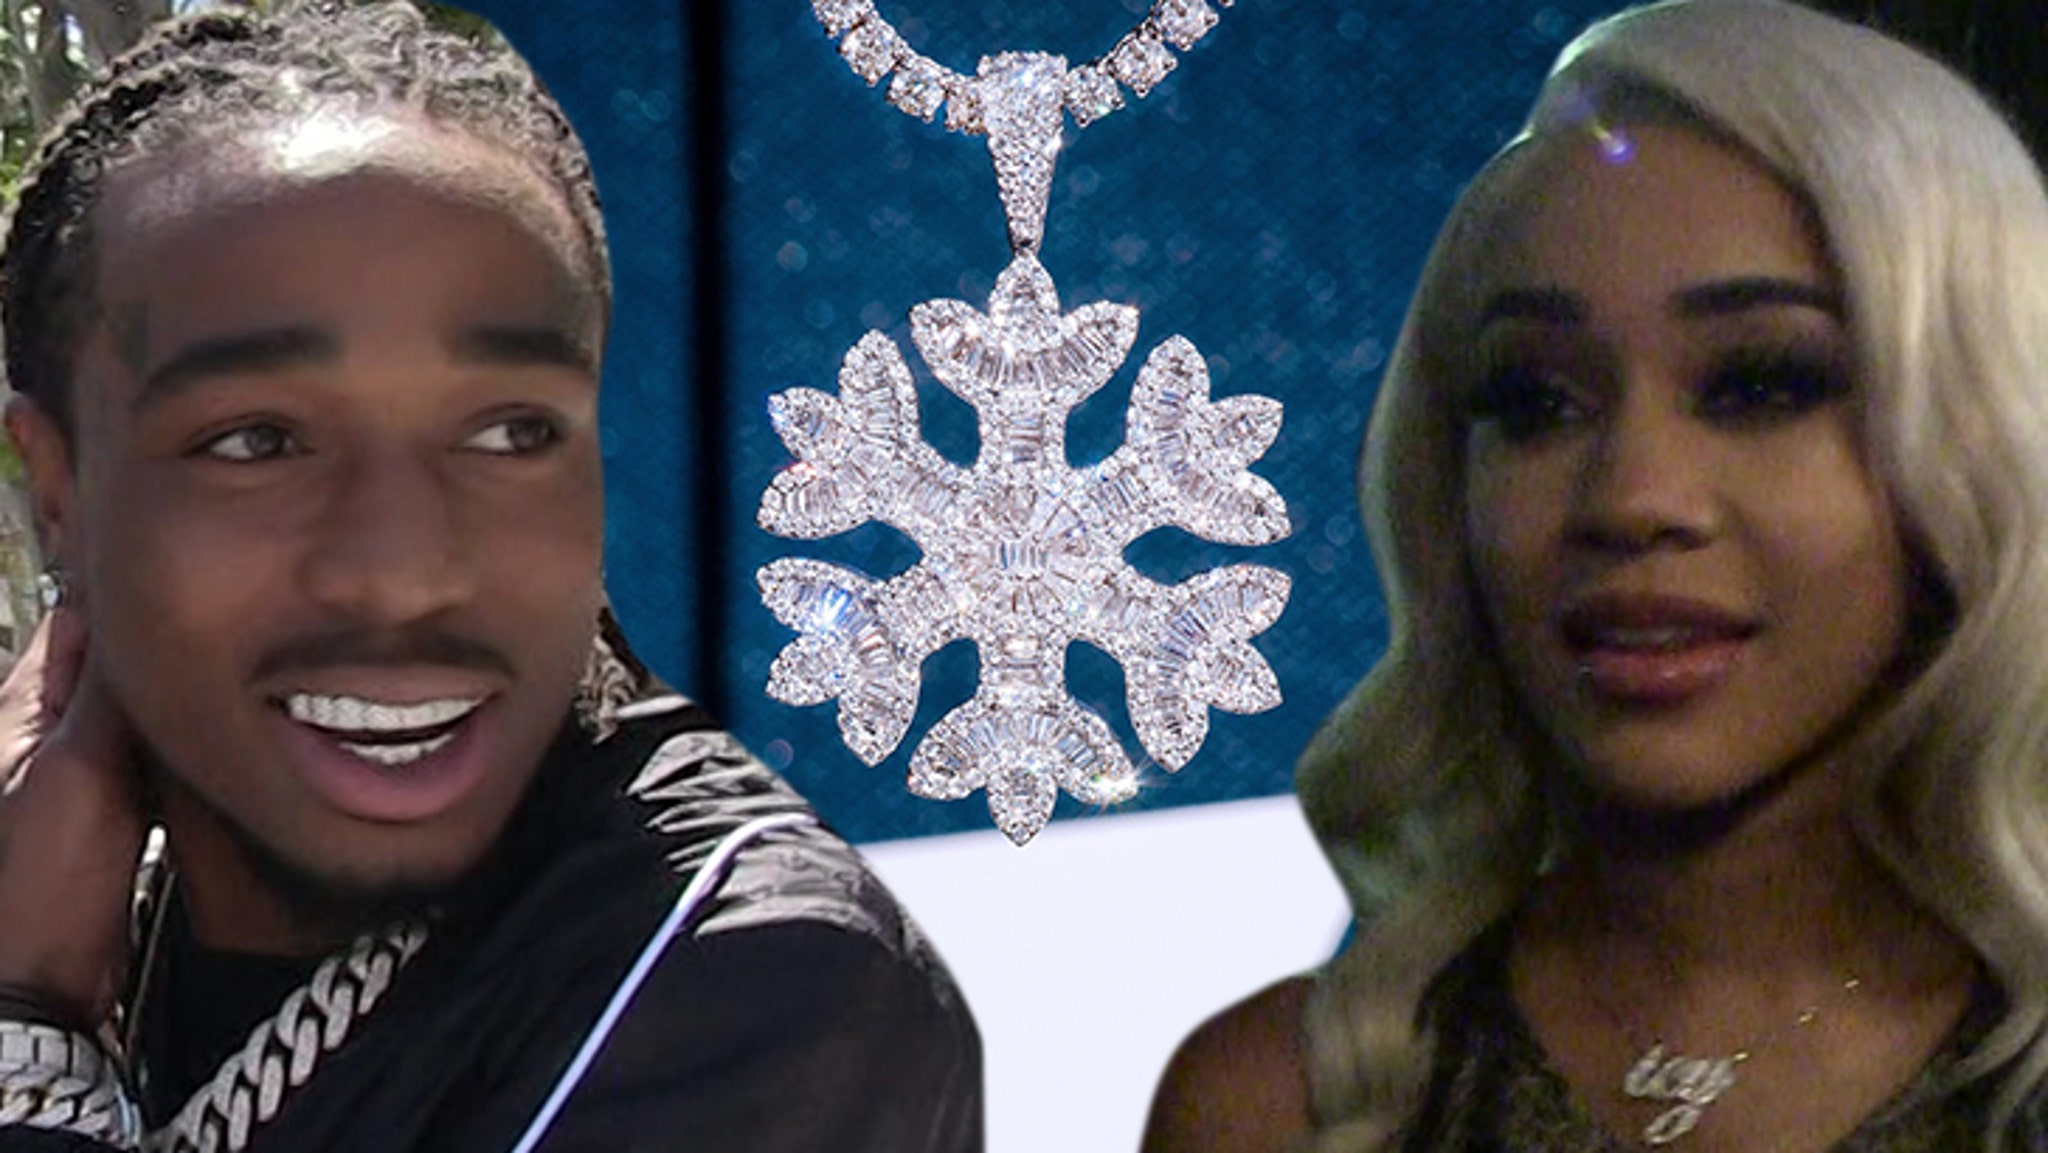 Quavo Drops $75,000 on Diamond Snowflake Bling For Rapper Girlfriend Saweet...